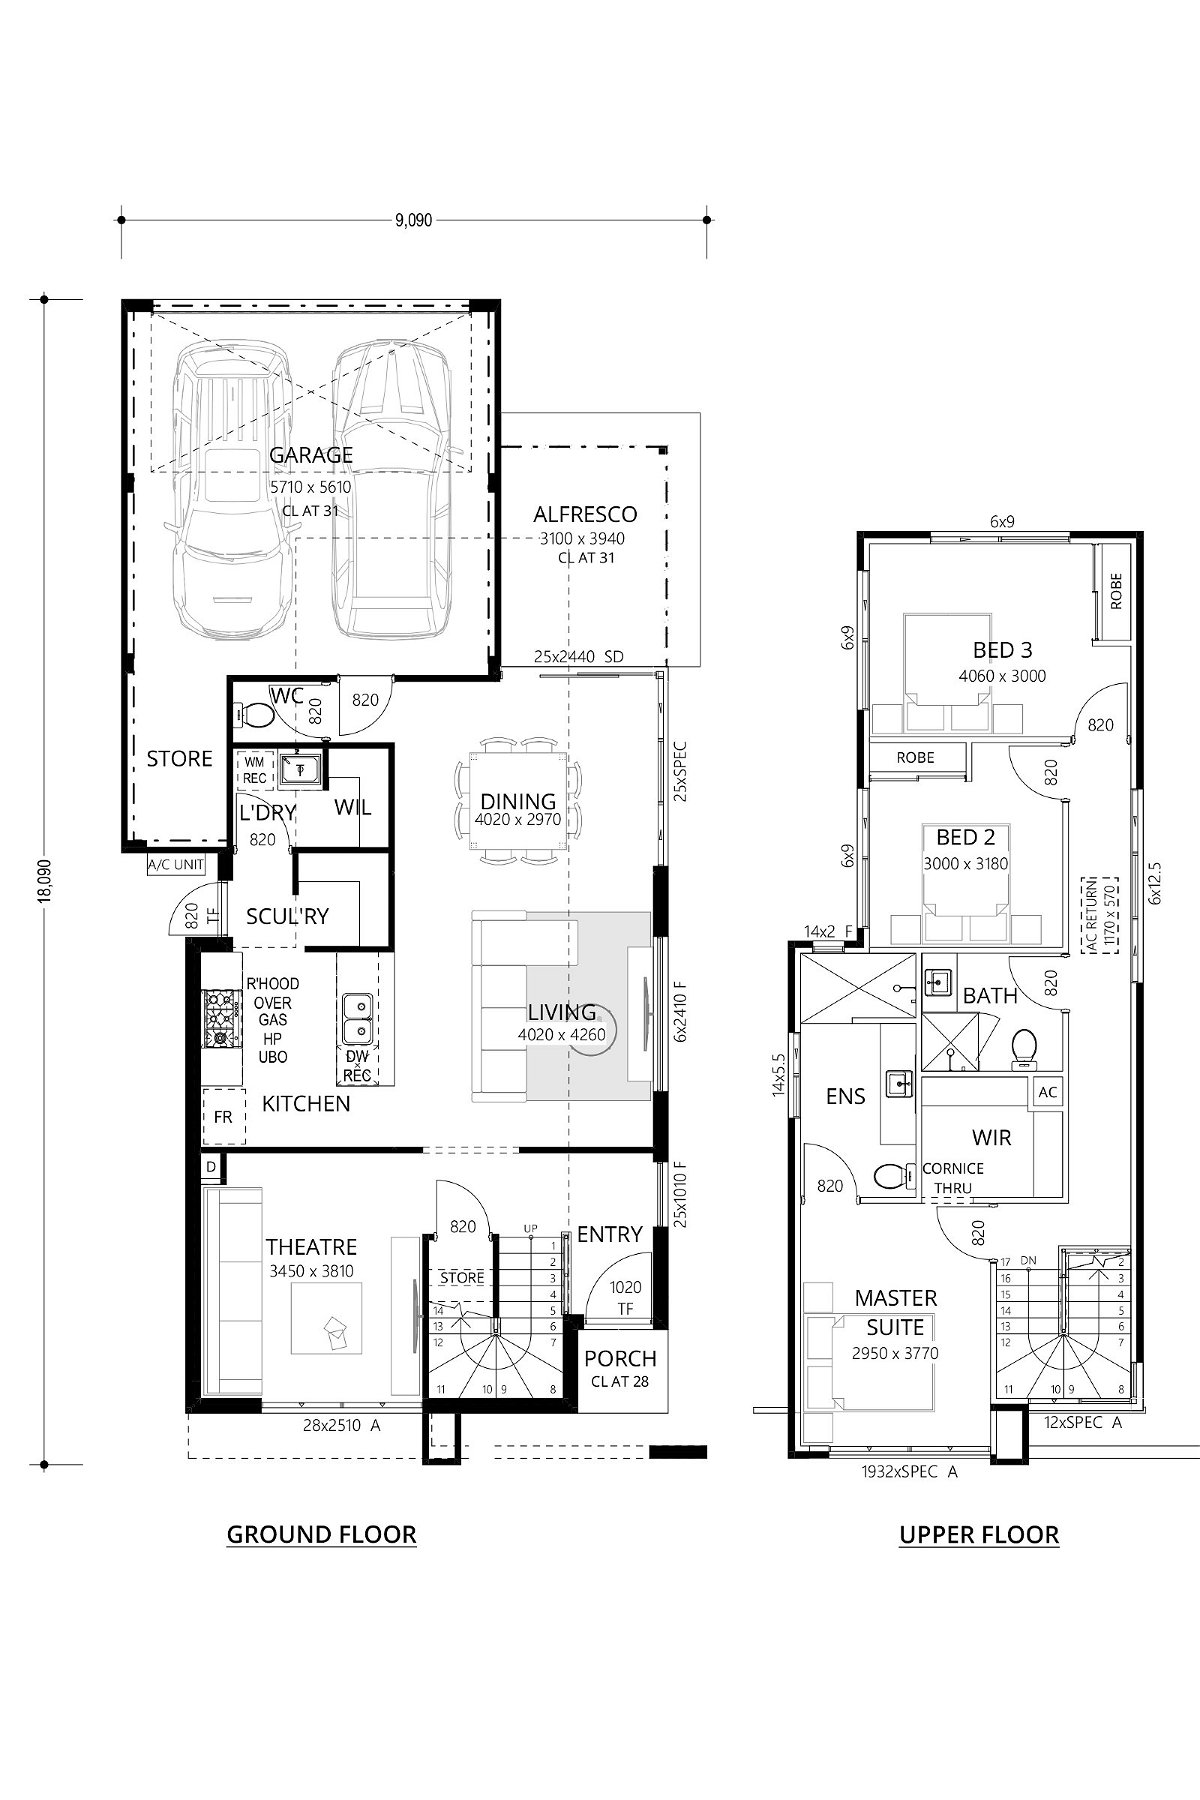 Residential Attitudes - Radical Candor - Floorplan - Radical Candor Floorplan Website